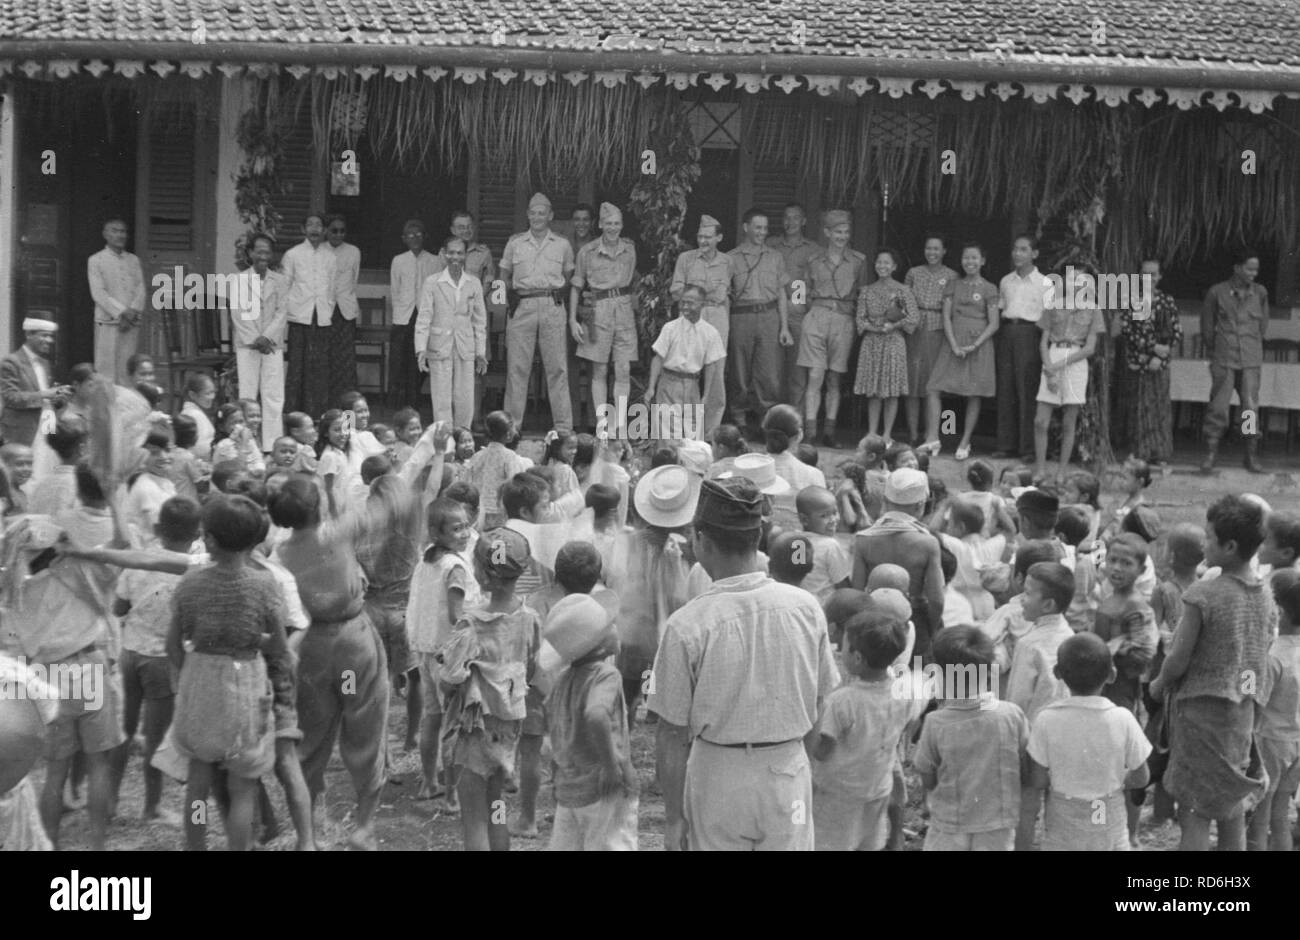 Ambarawa Op 20 settembre werd de Hollands-Indische scuola geopend feestelijk. E, Bestanddeelnr 373-3-4. Foto Stock